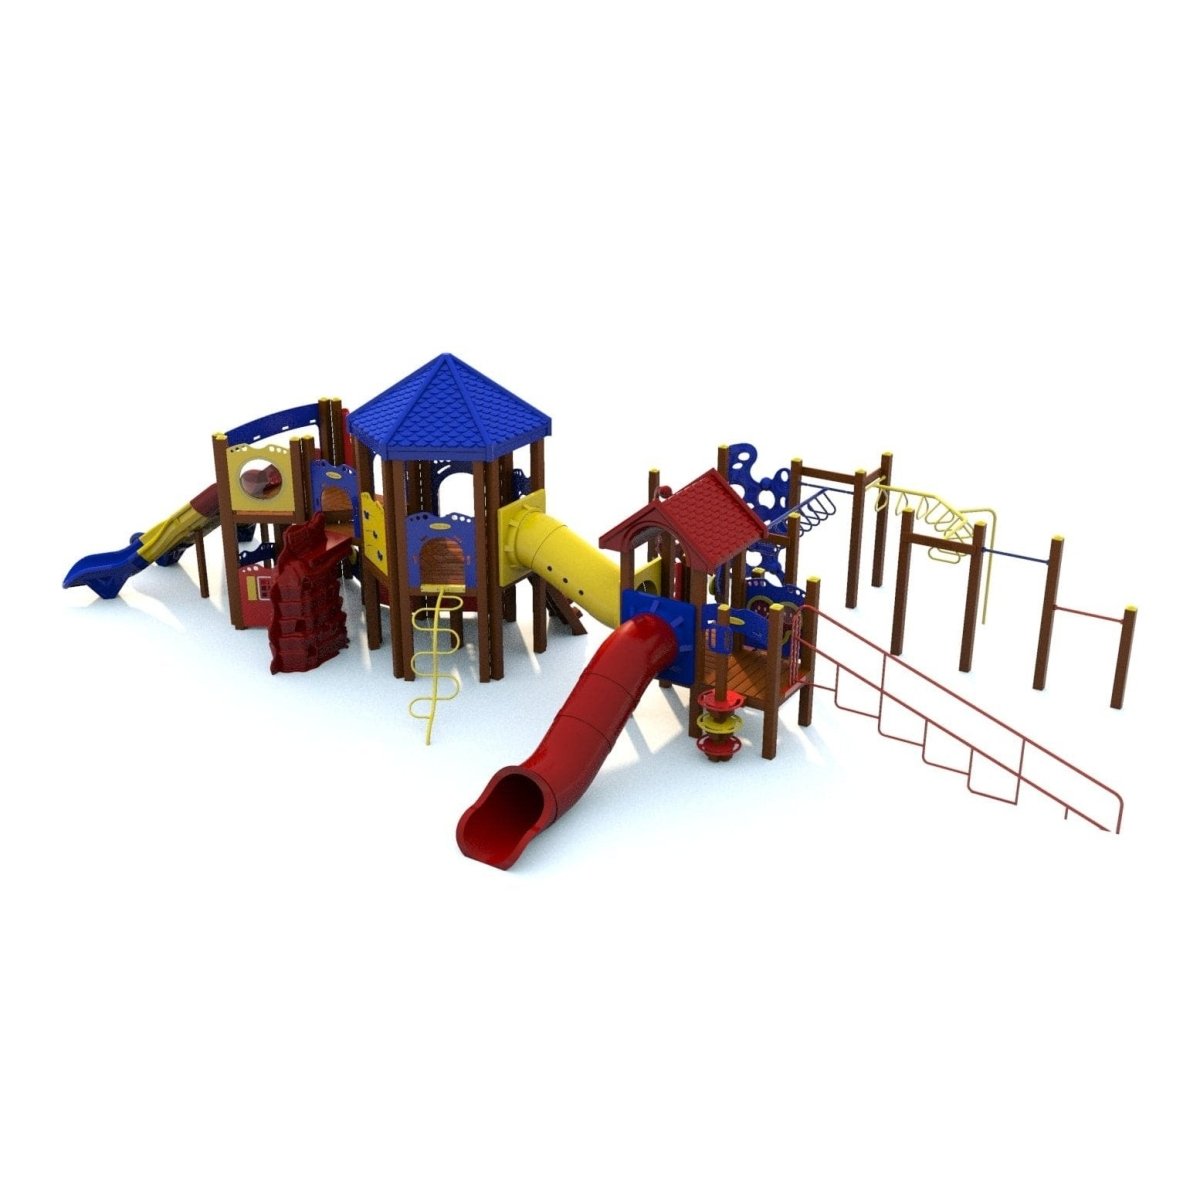 Rapid Run Playset - School-Age Playgrounds - Playtopia, Inc.